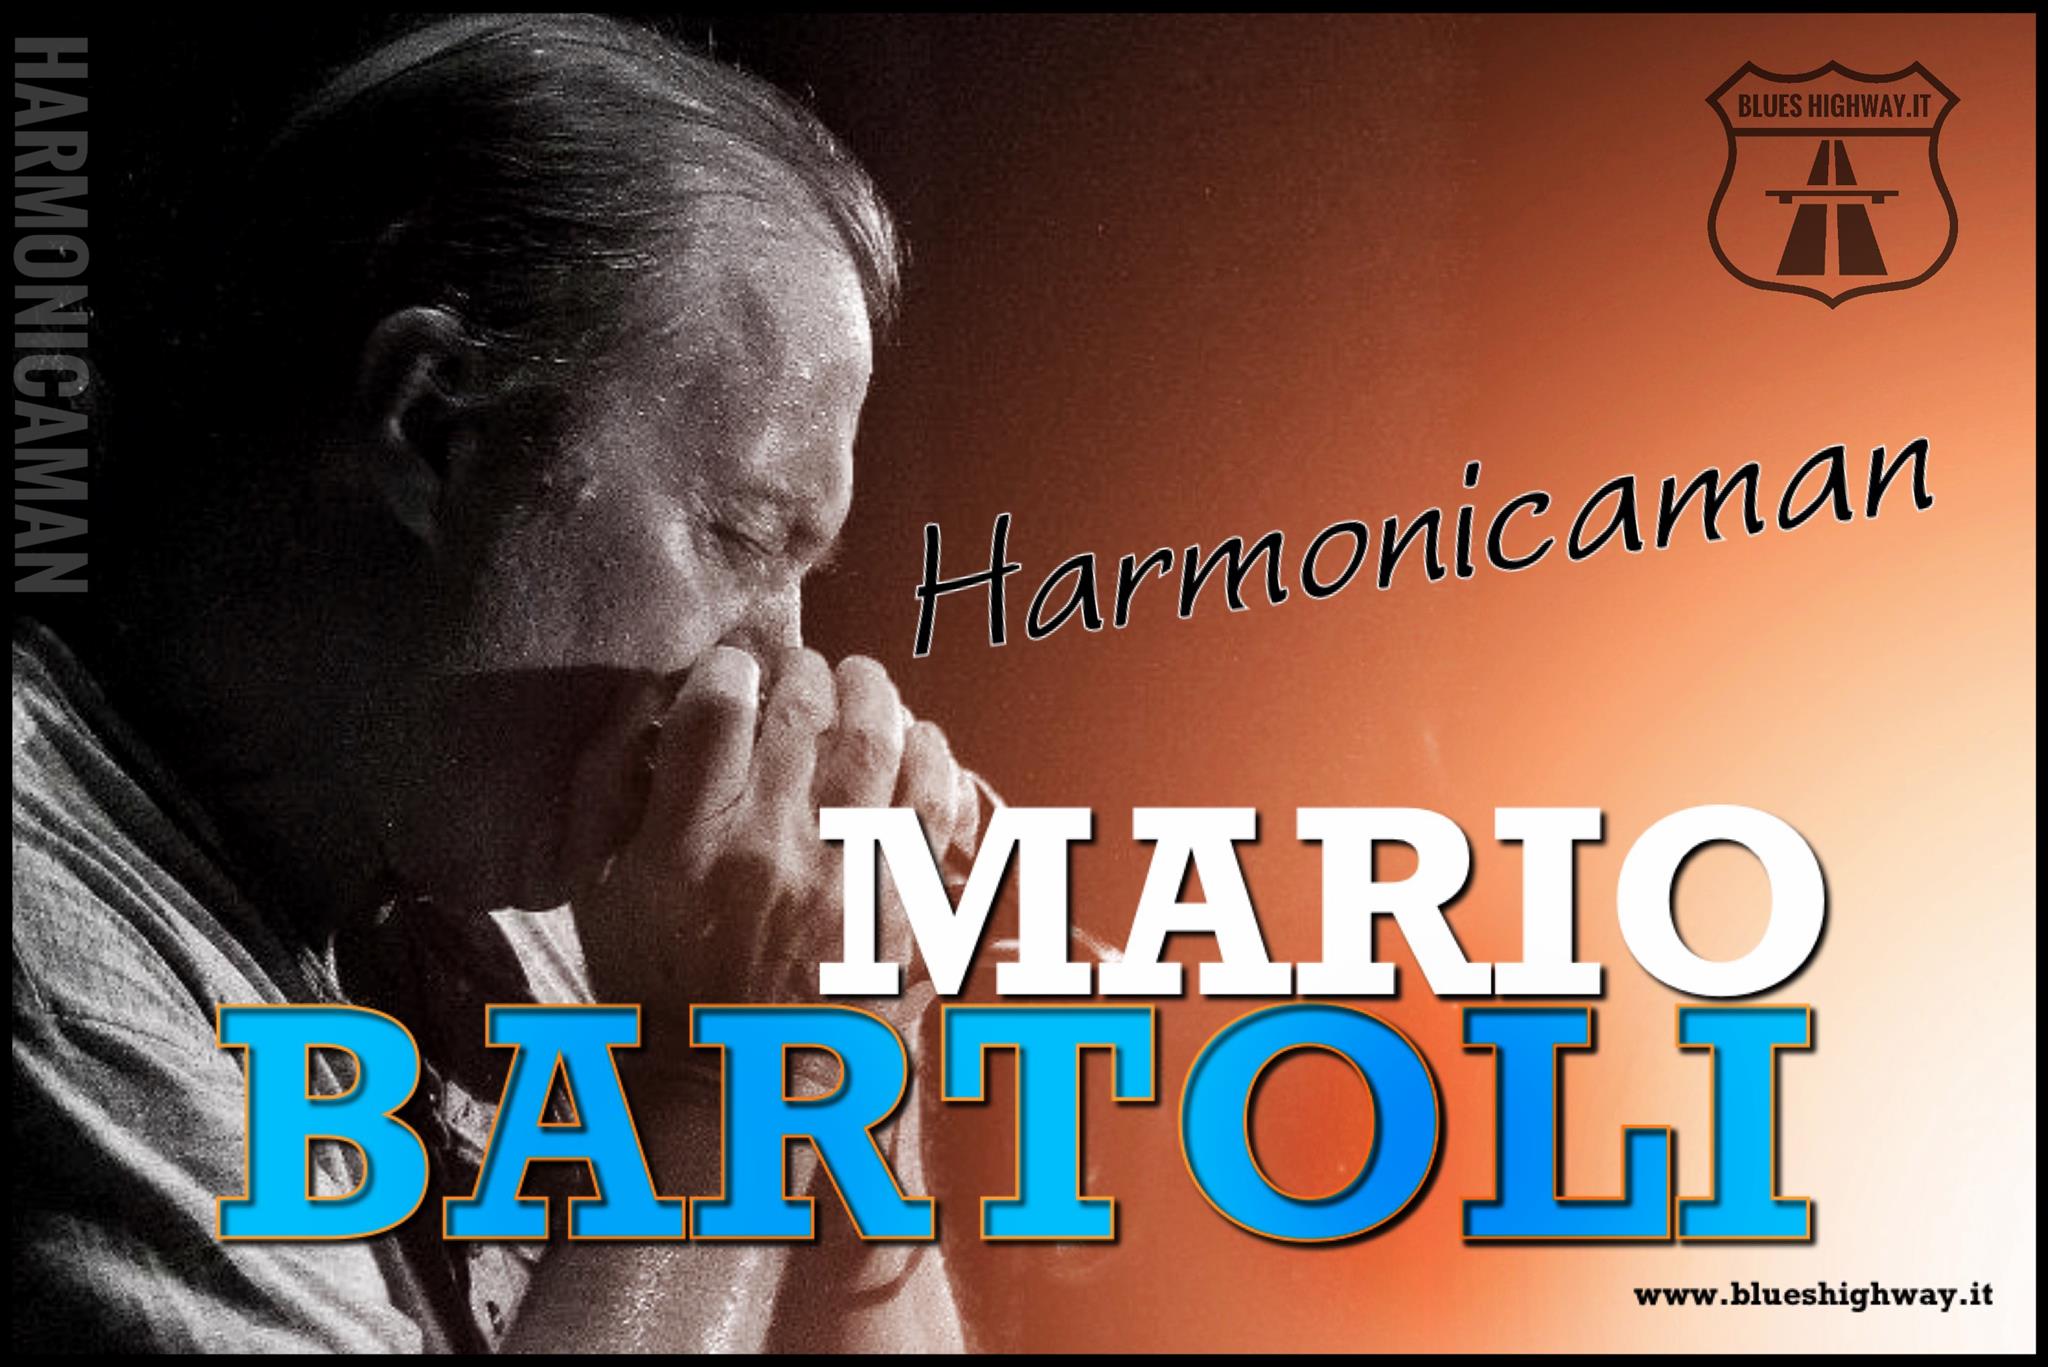 MARIO BARTOLI "HARMONICAMAN"